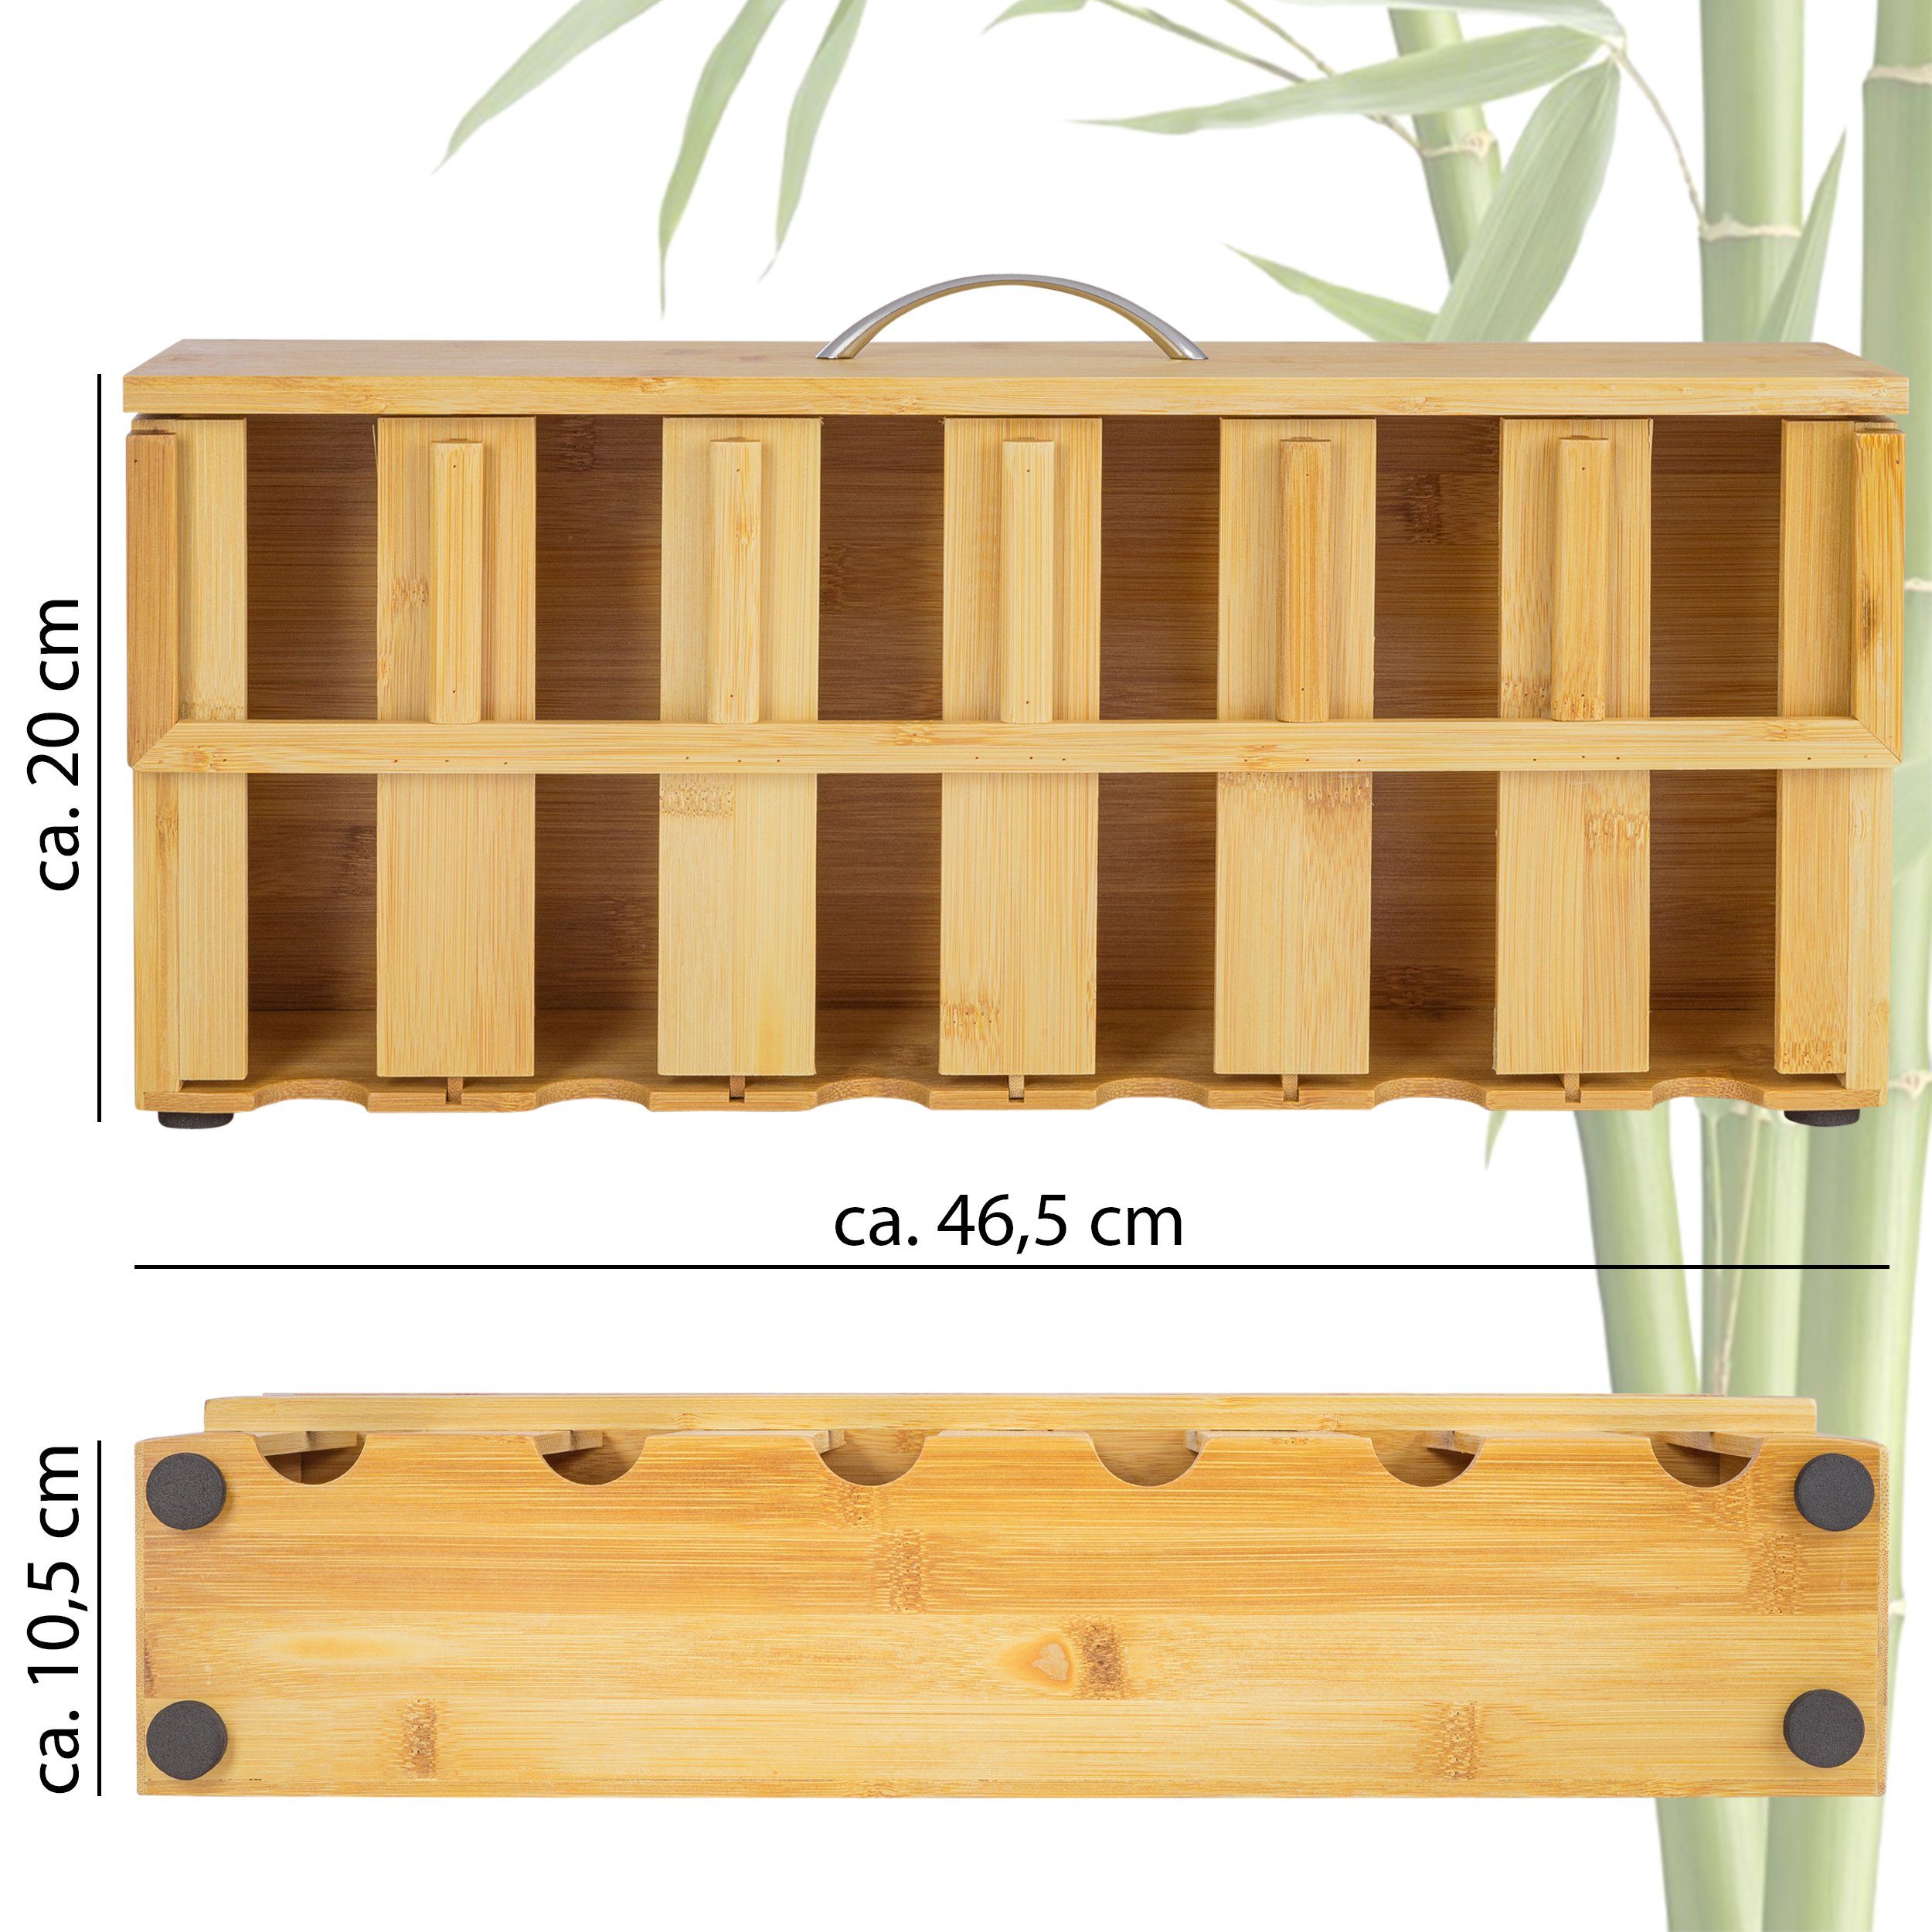 ONVAYA Teebox Teebox aus Holz, Bambus Teebeutelbox, 6 Fächern, Teekiste mit